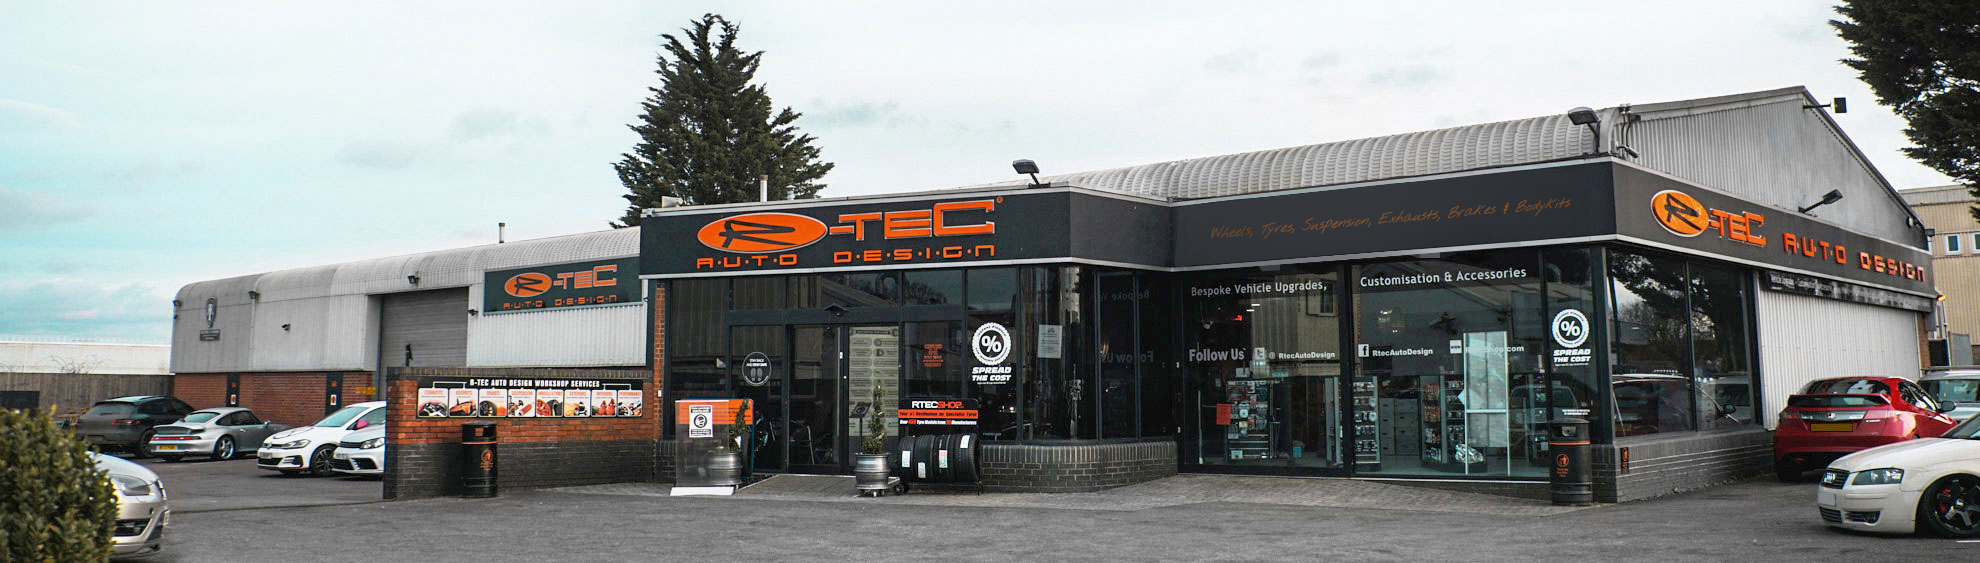 The R-Tec Shop Front